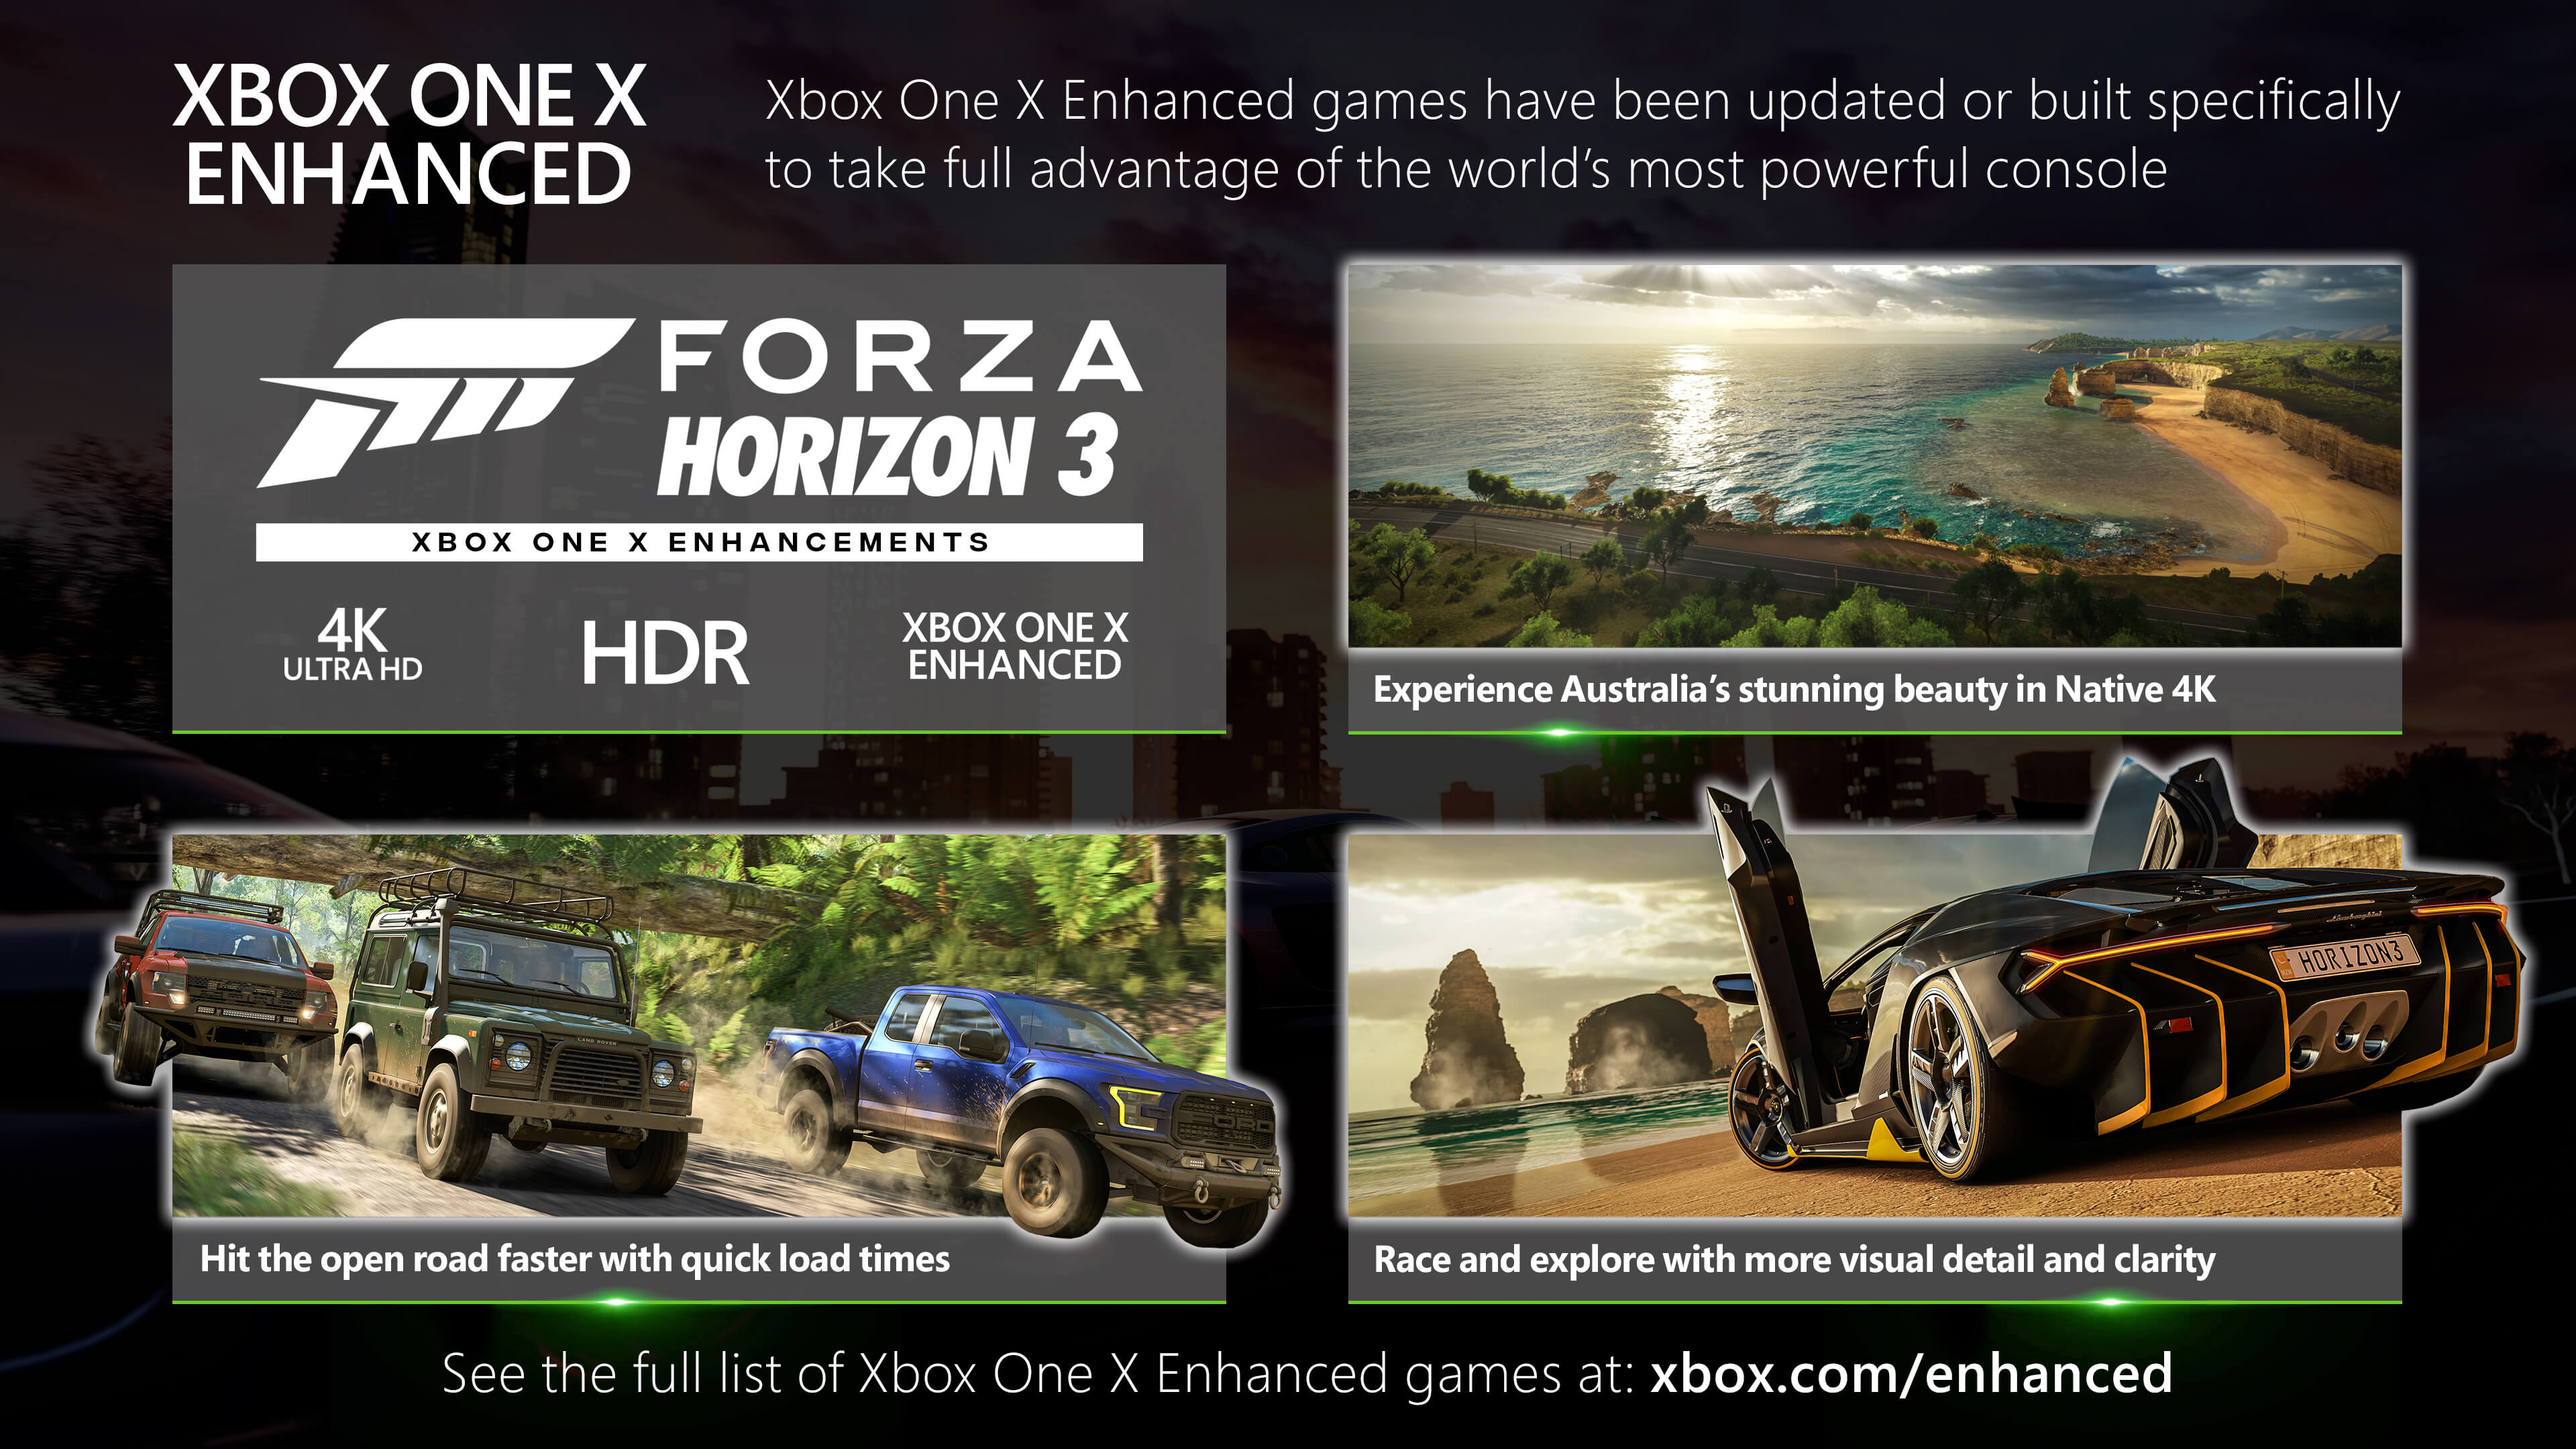 Xbox One X Forza Horizon 3 Battlecard